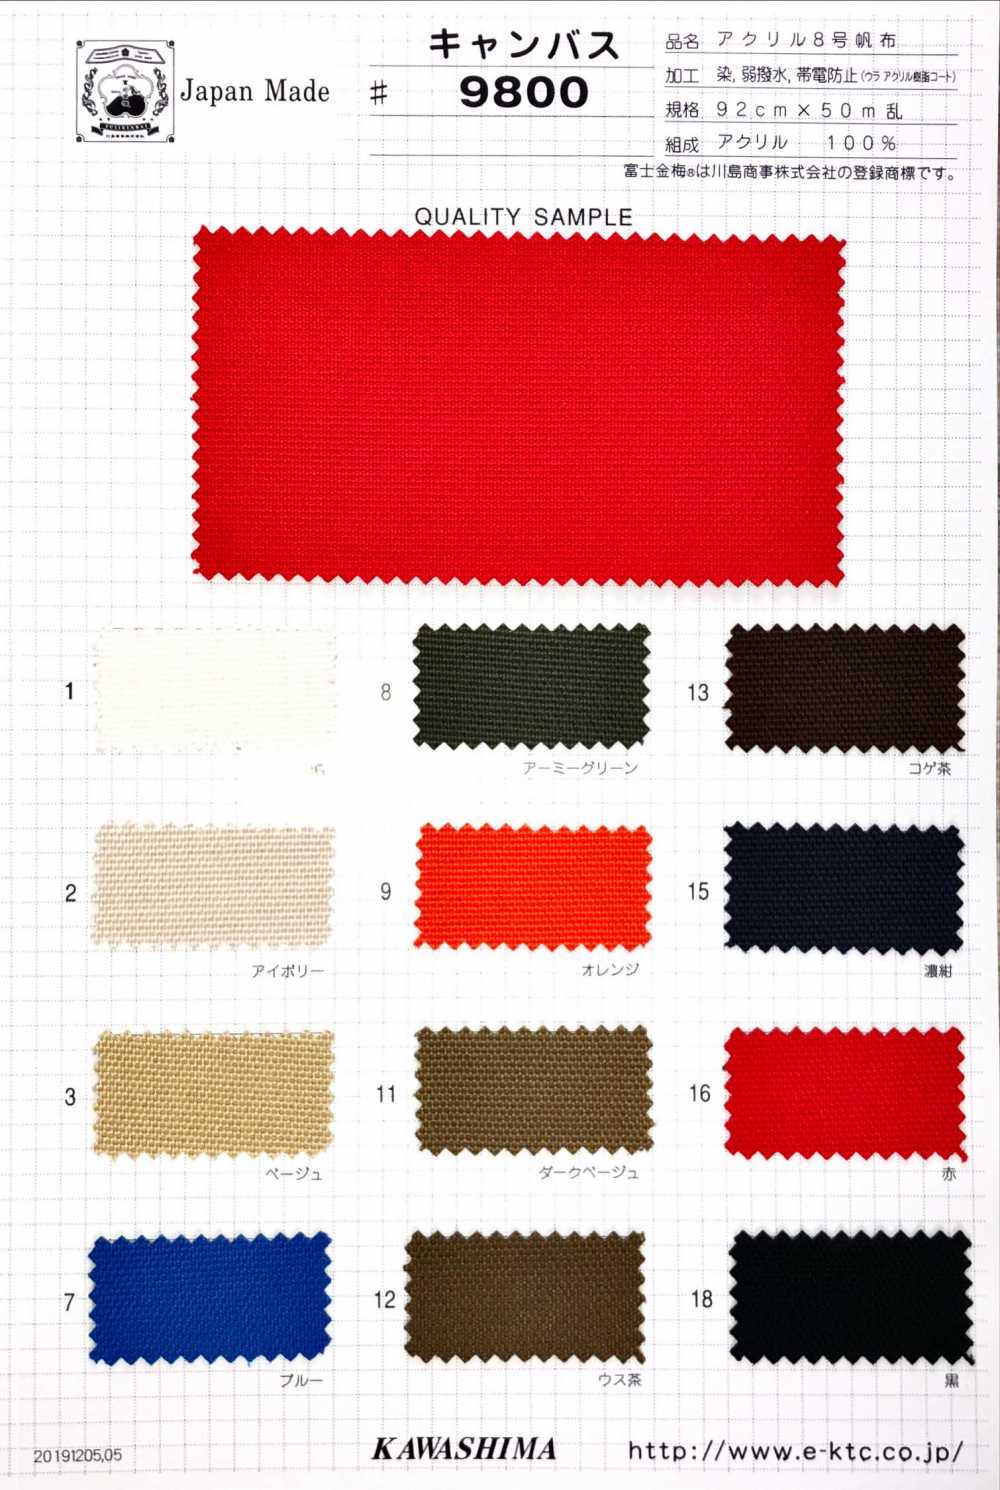 9800 Fuji Kinume Acrylic Canvas No. 8 Weak Water Repellency, Antistatic, Back Acrylic Coat[Fabrication De Textile] Fuji Or Prune